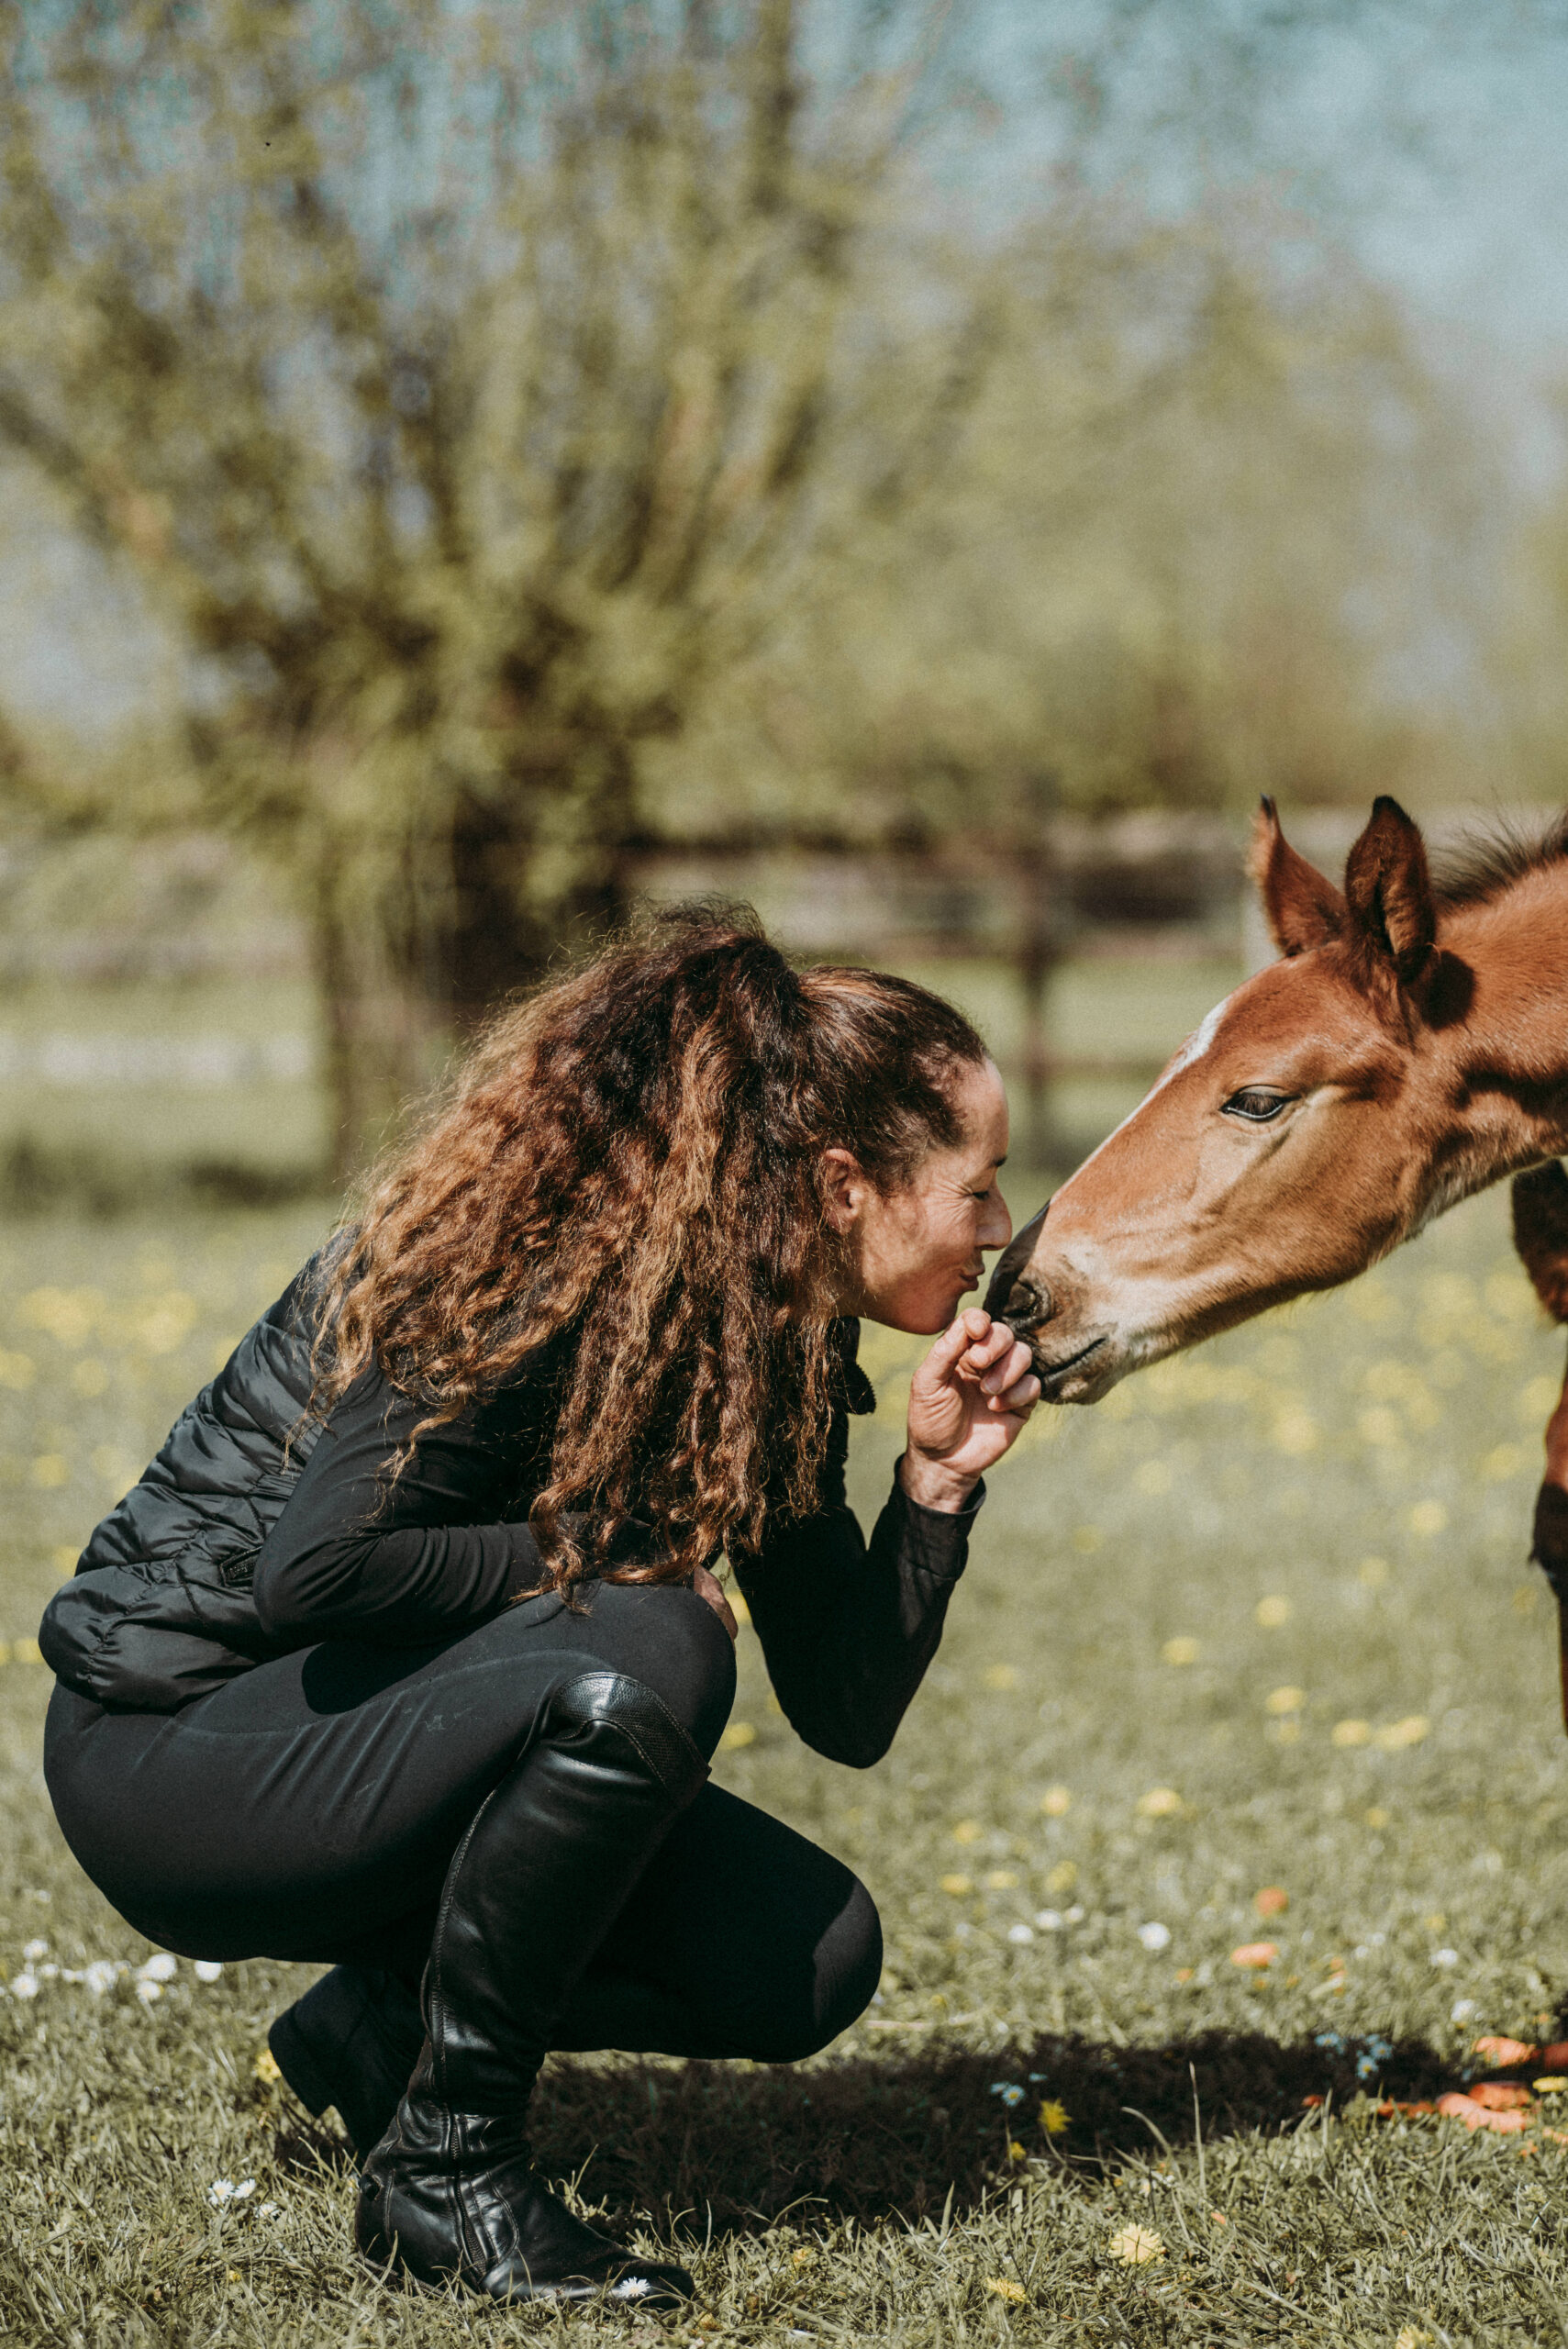 Coachingssessie tussen mens en paard voor emotionele verbinding.